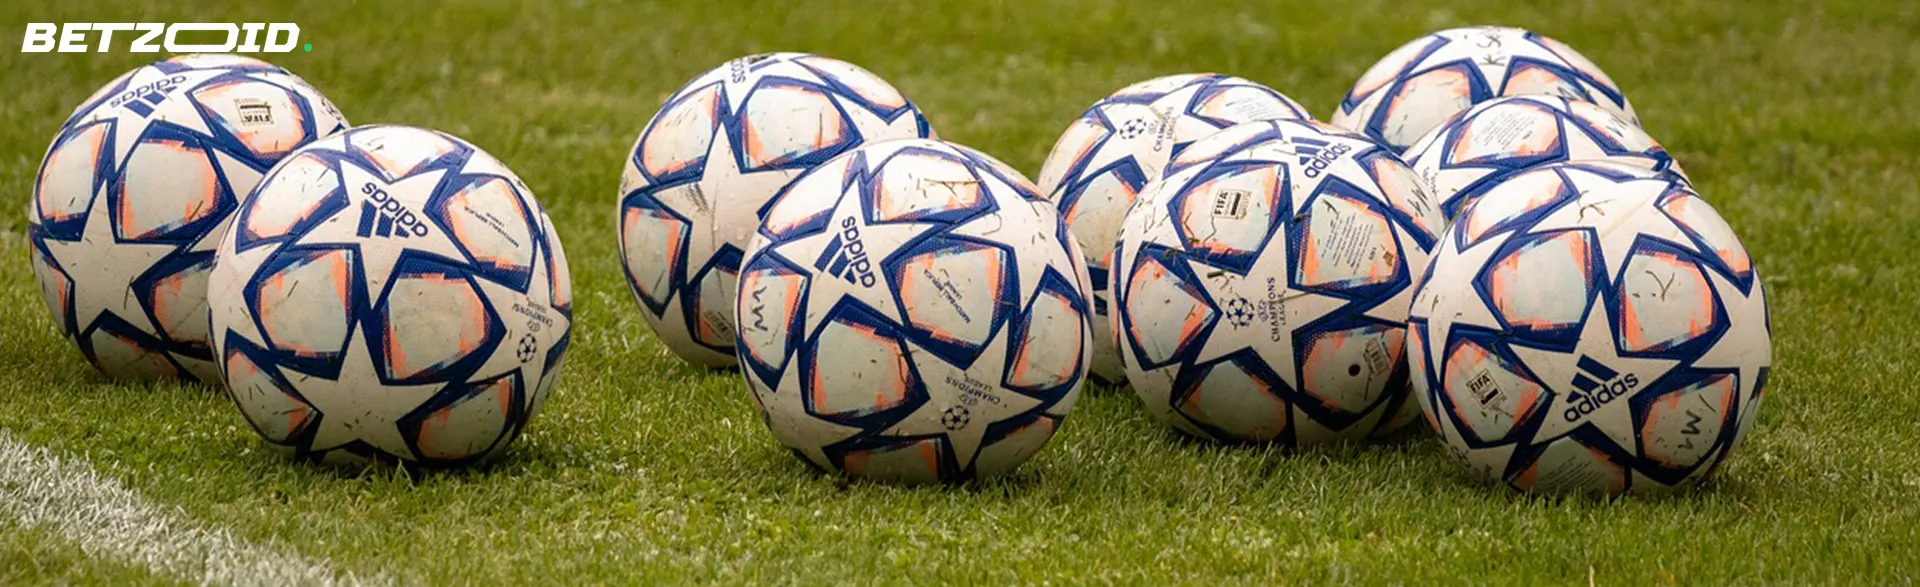 A row of Adidas soccer balls on grass.